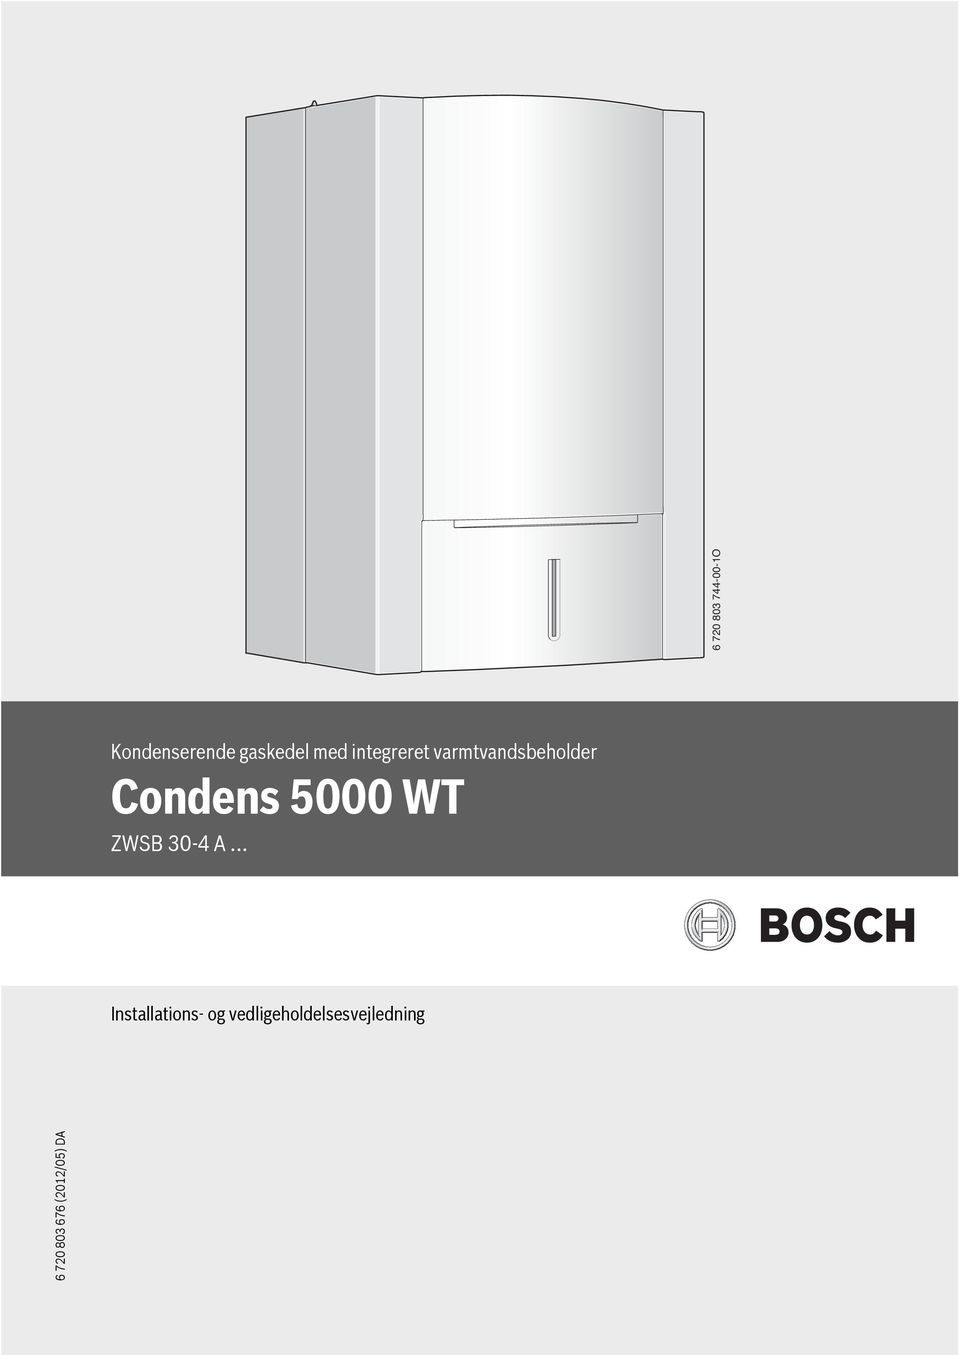 varmtvandsbeholder ZWSB 30-4 A.